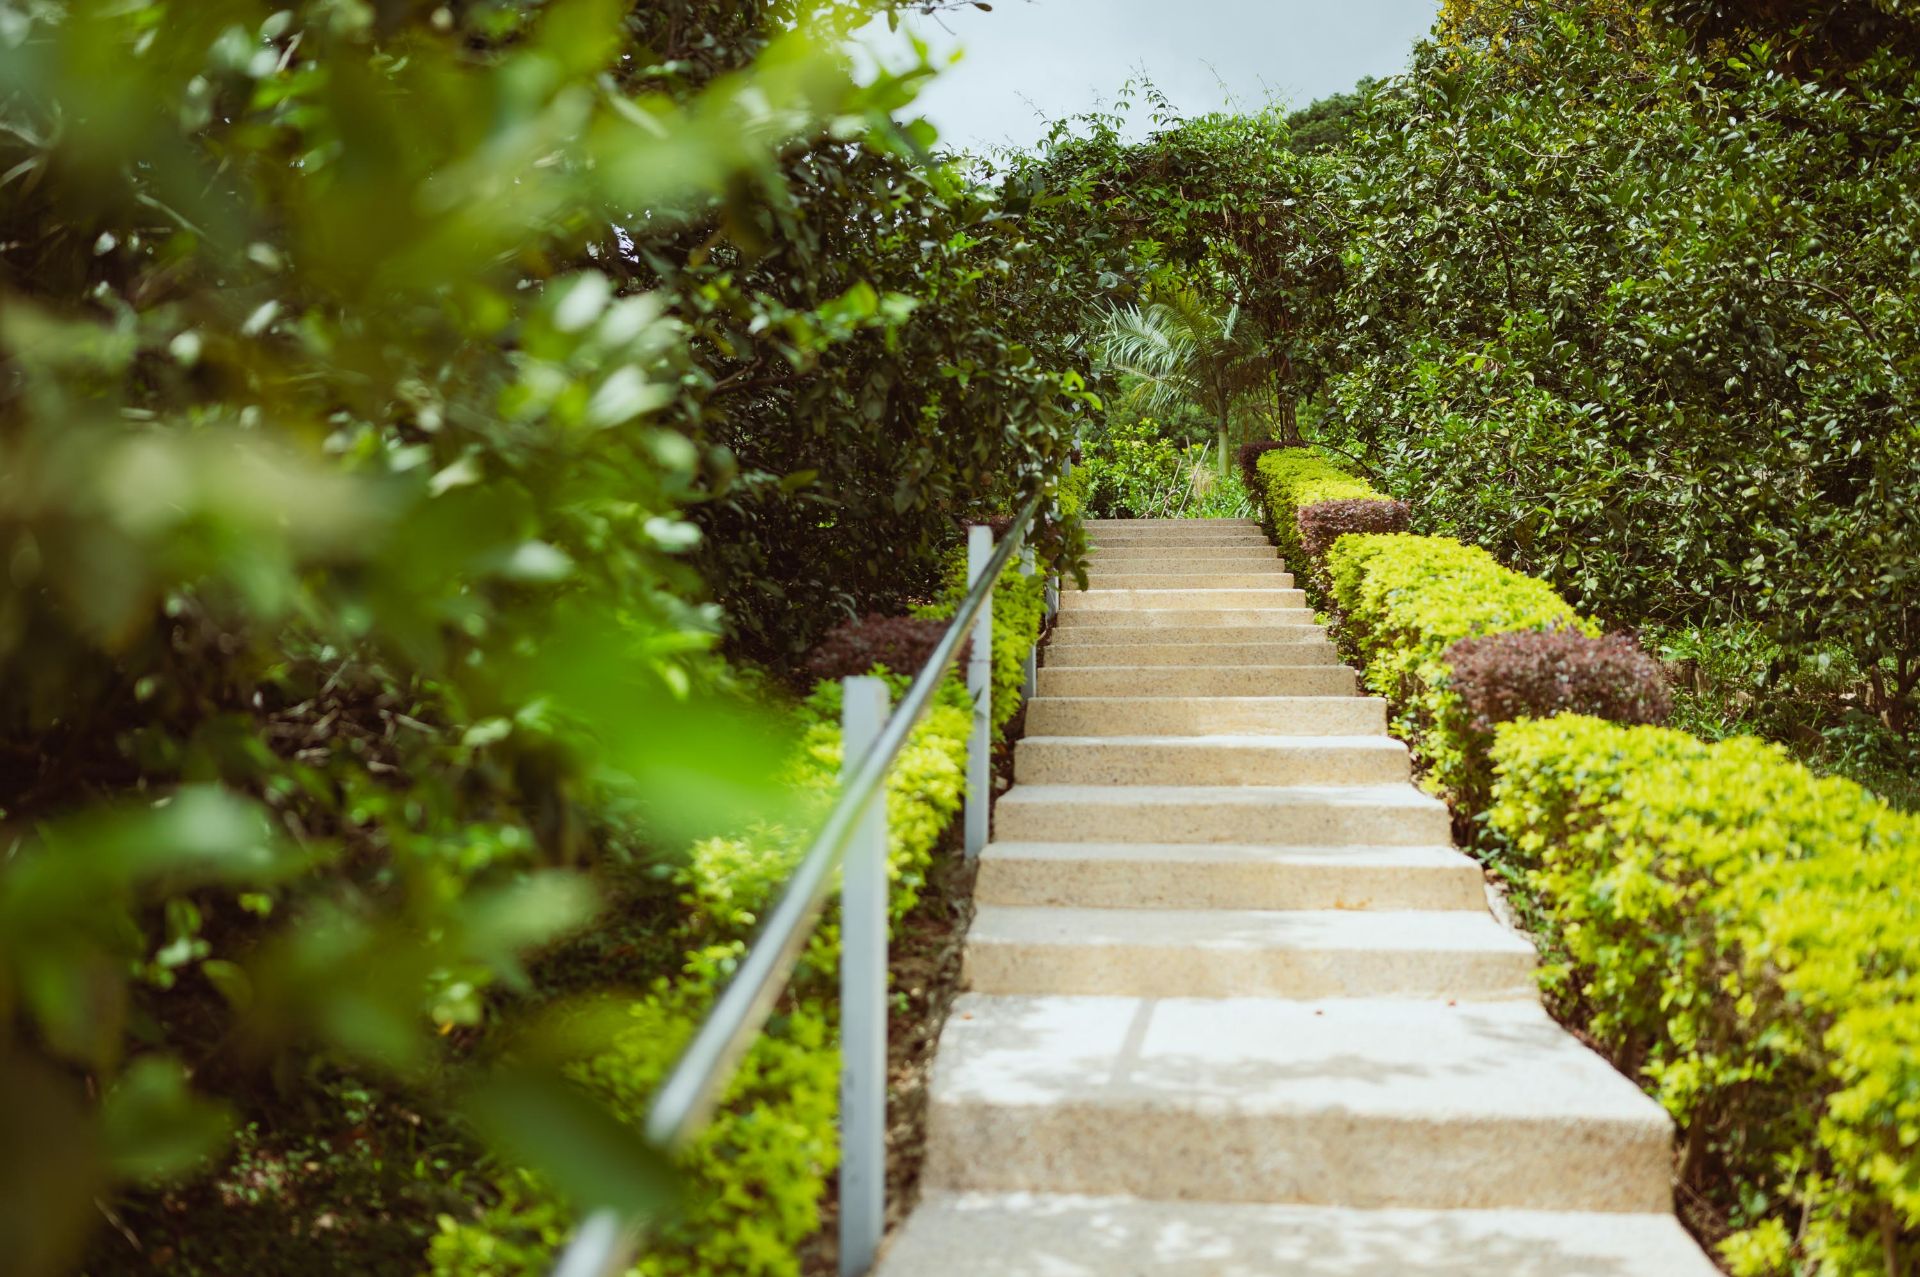 Stairs in a garden